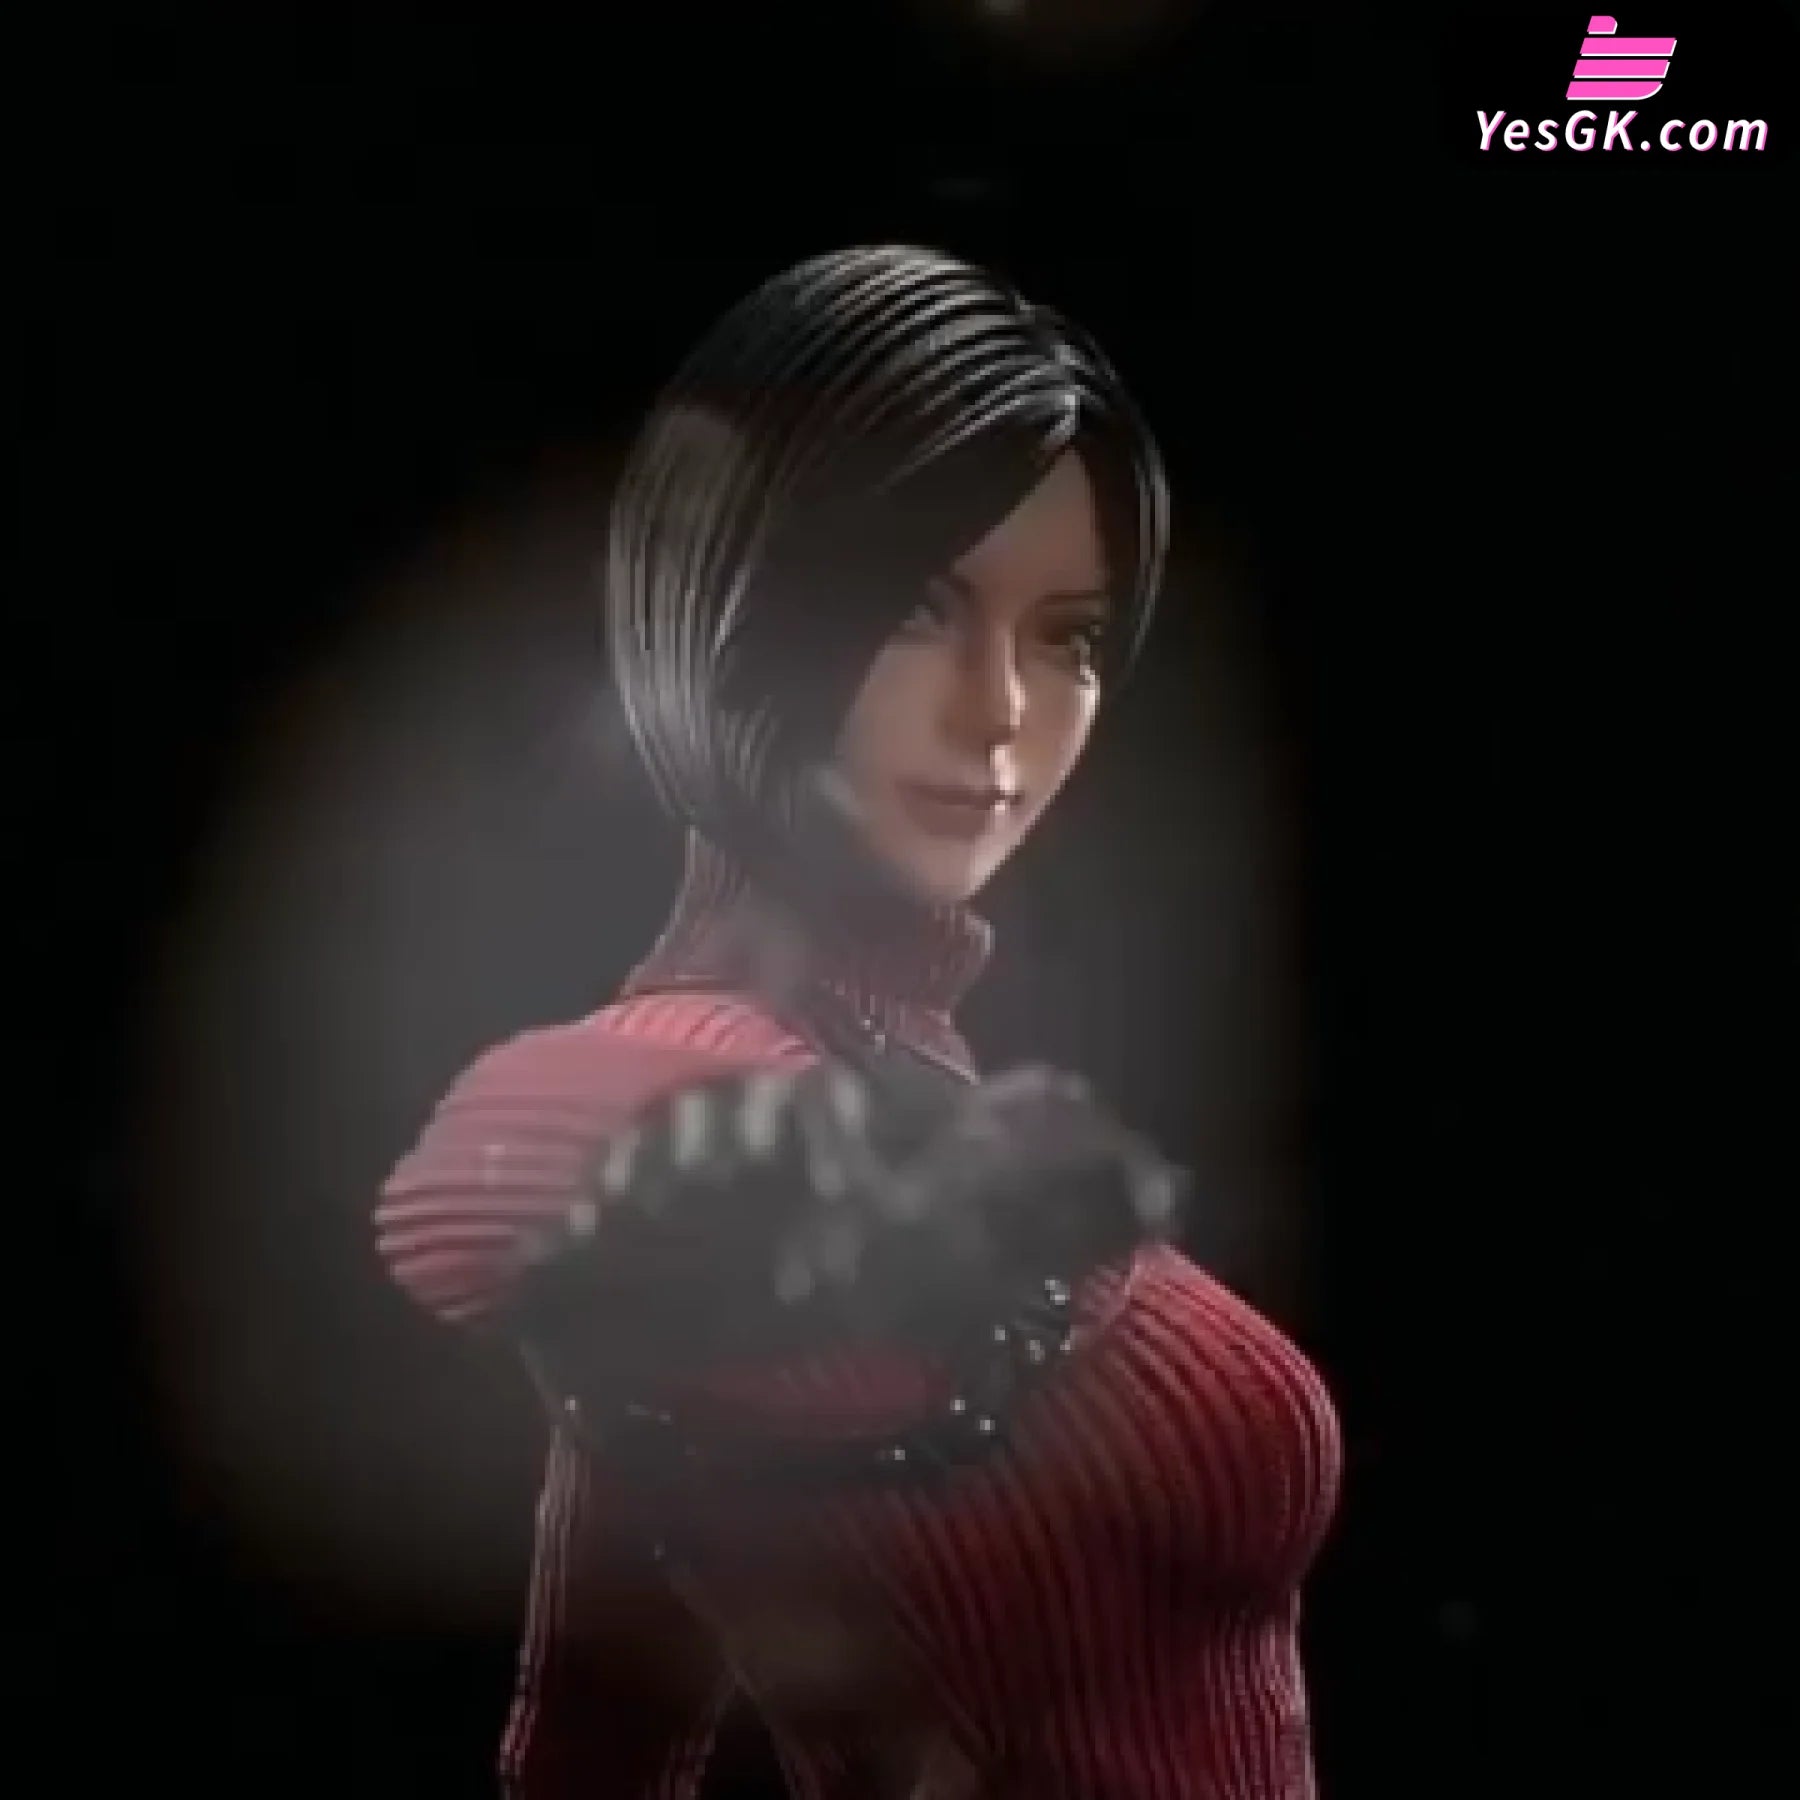 1/3 Scale Ada Wong Remake - Resident Evil 4 Resin Statue - FanArt